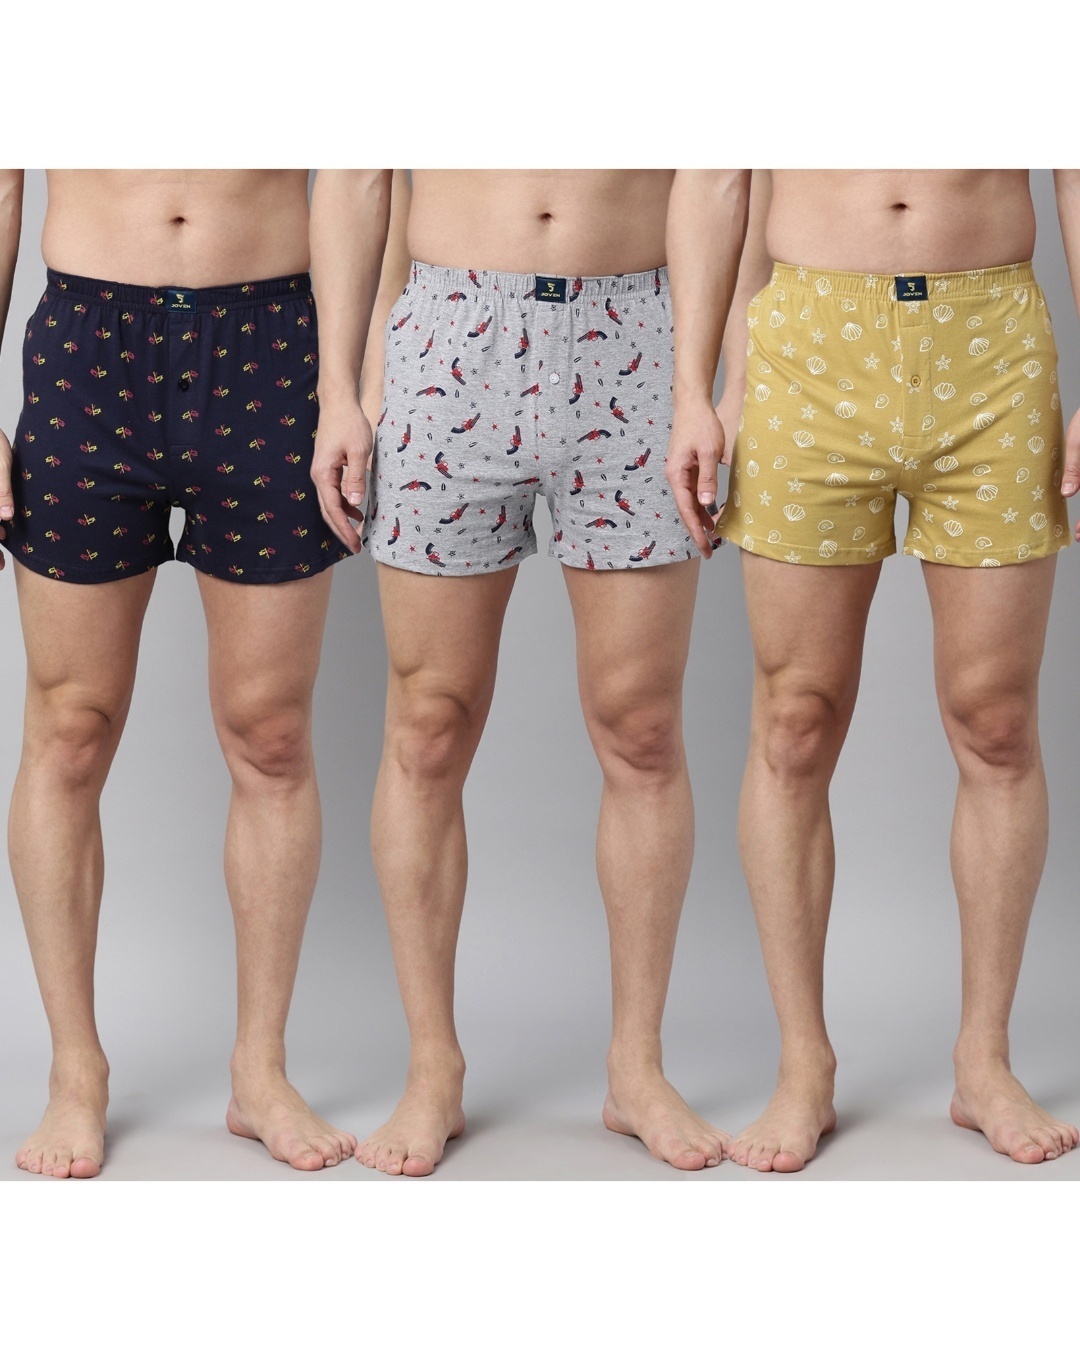 Shop Men's Multicolor Printed Regular Fit Boxer (Pack of 3)-Front